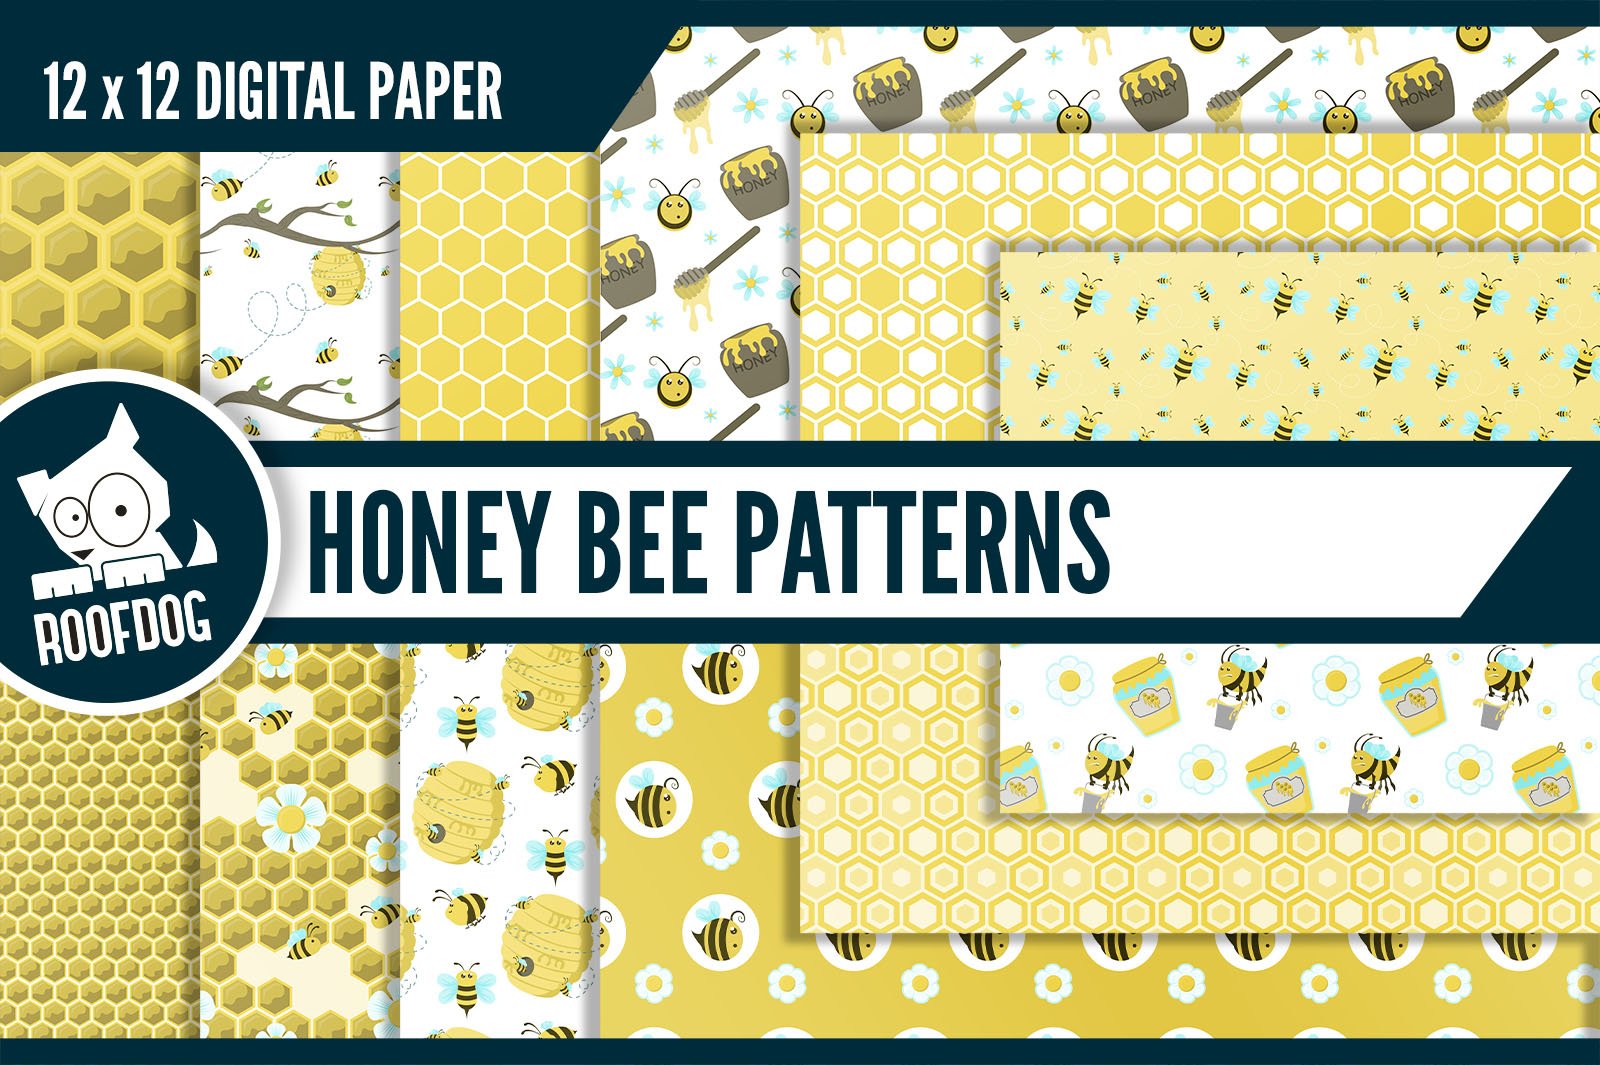 Honey bee digital paper cover image.